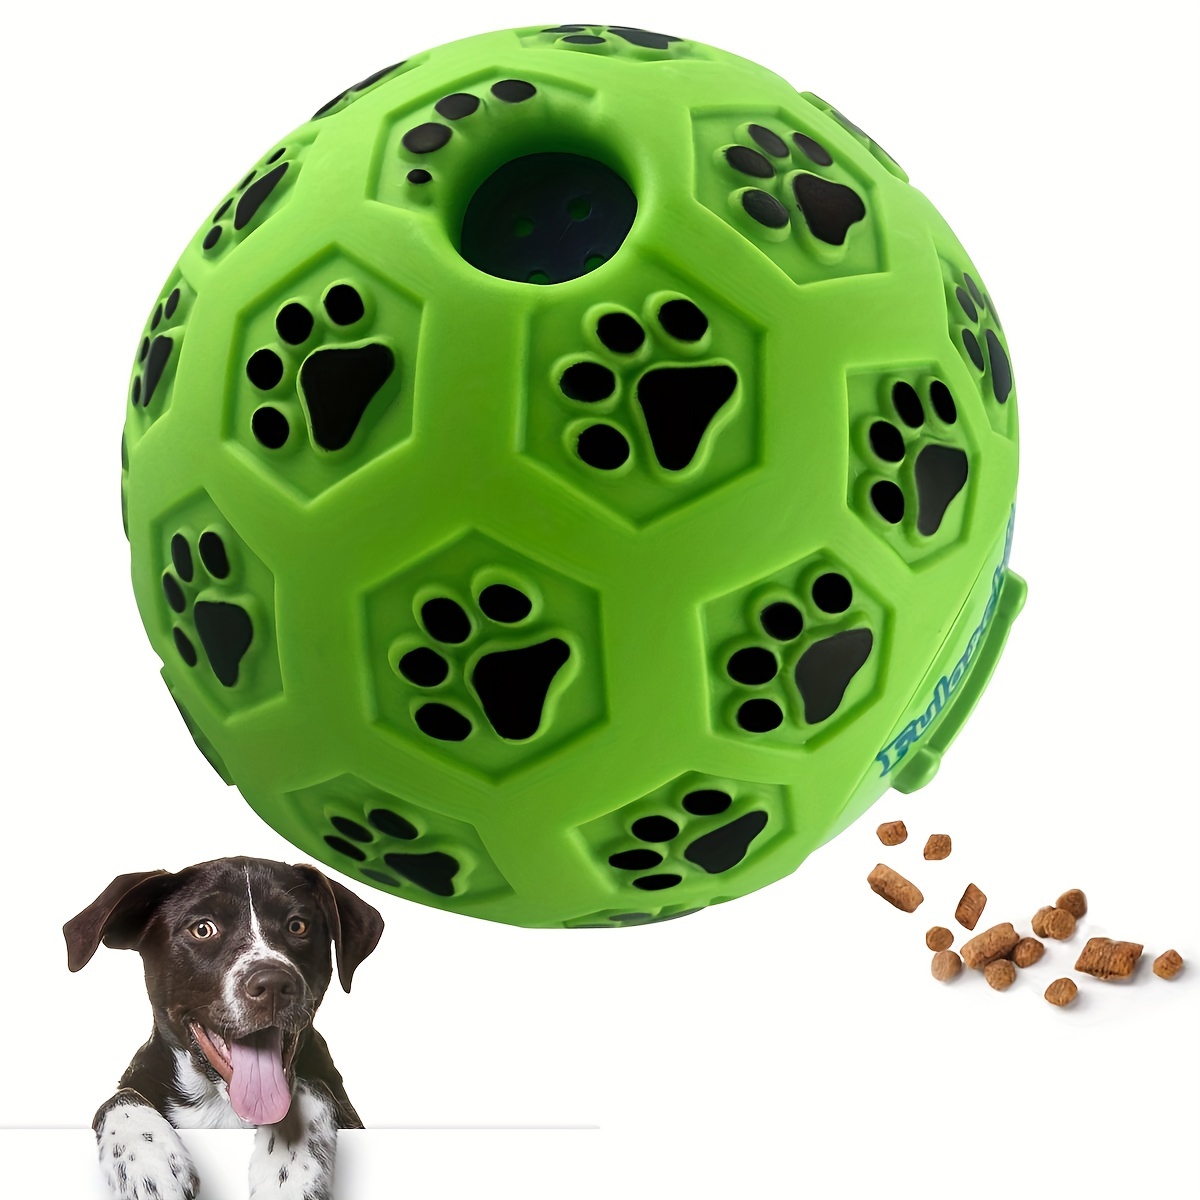 Dog Toys Giggle Interactive Dog Treat Toys Wobble Wiggle Waggle